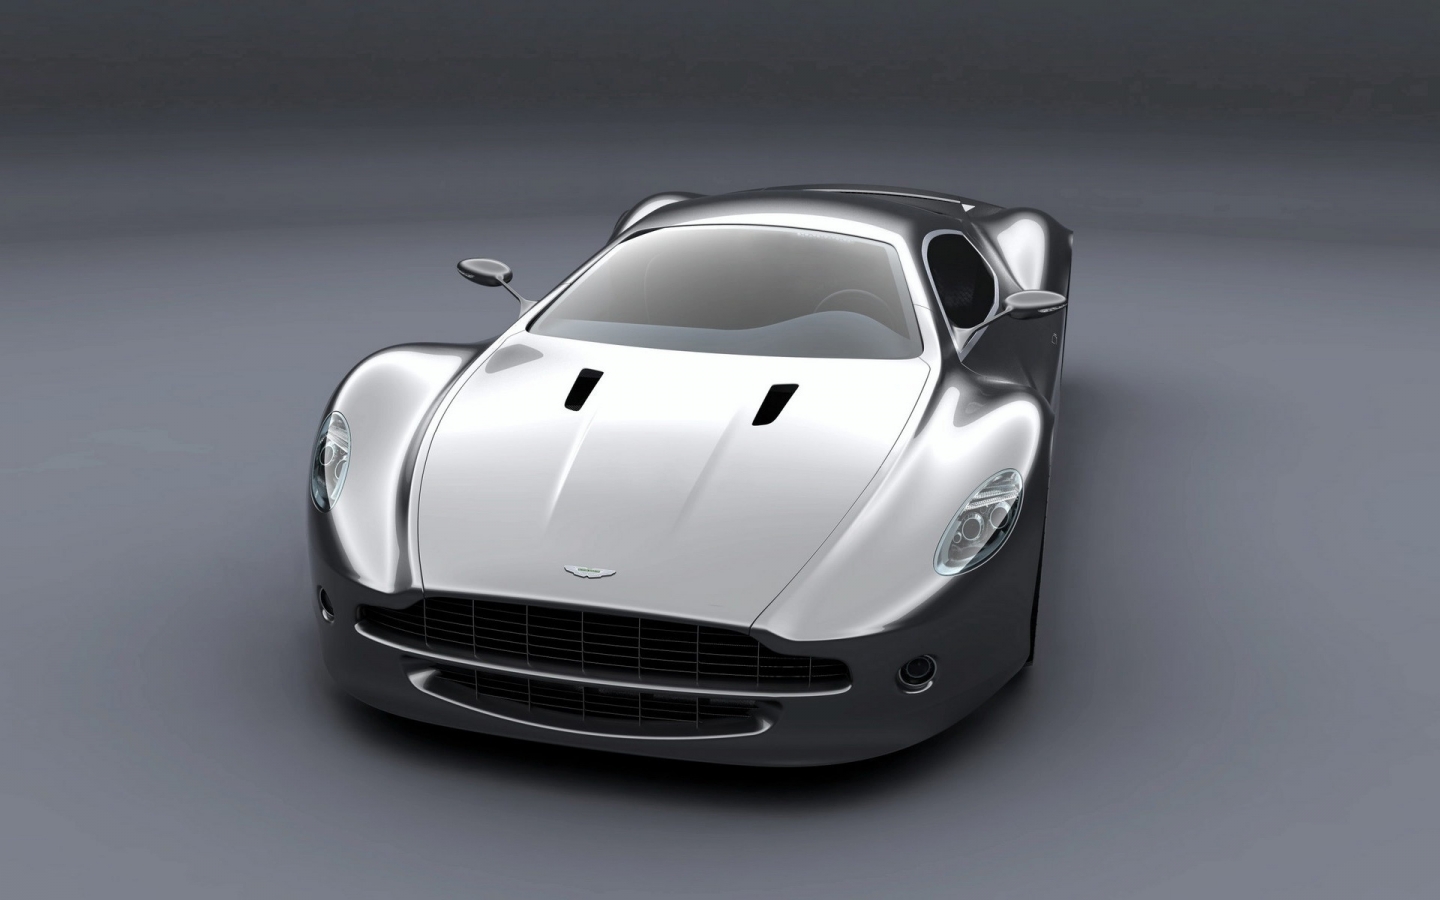 Aston Martin AMV 10 for 1440 x 900 widescreen resolution